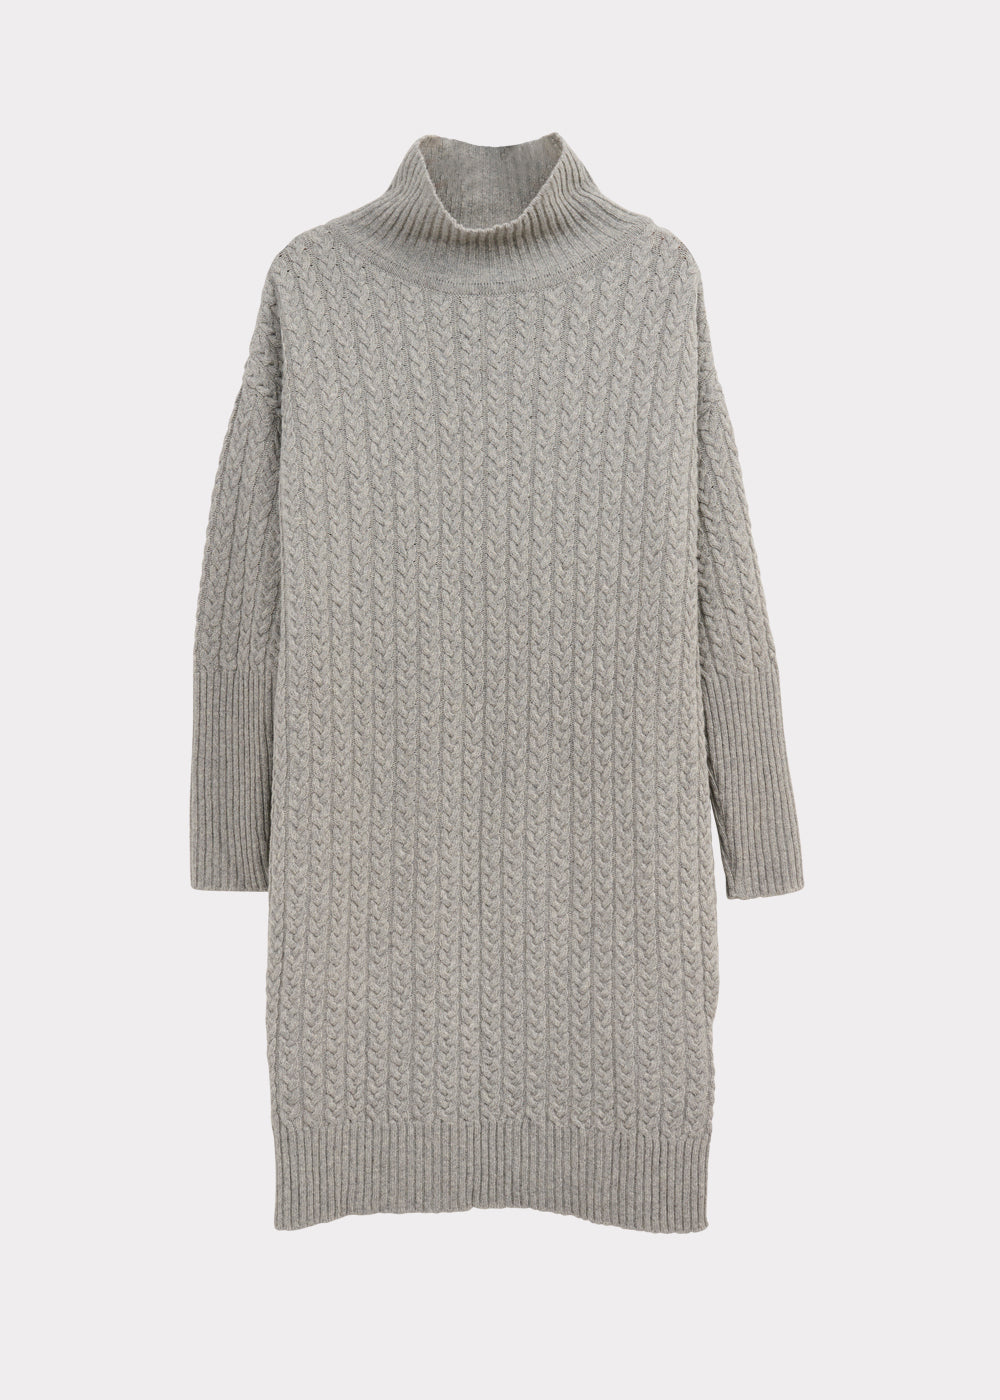 CHUNKY TURTLE -mekko, Melange Grey, Cable knit, naisten